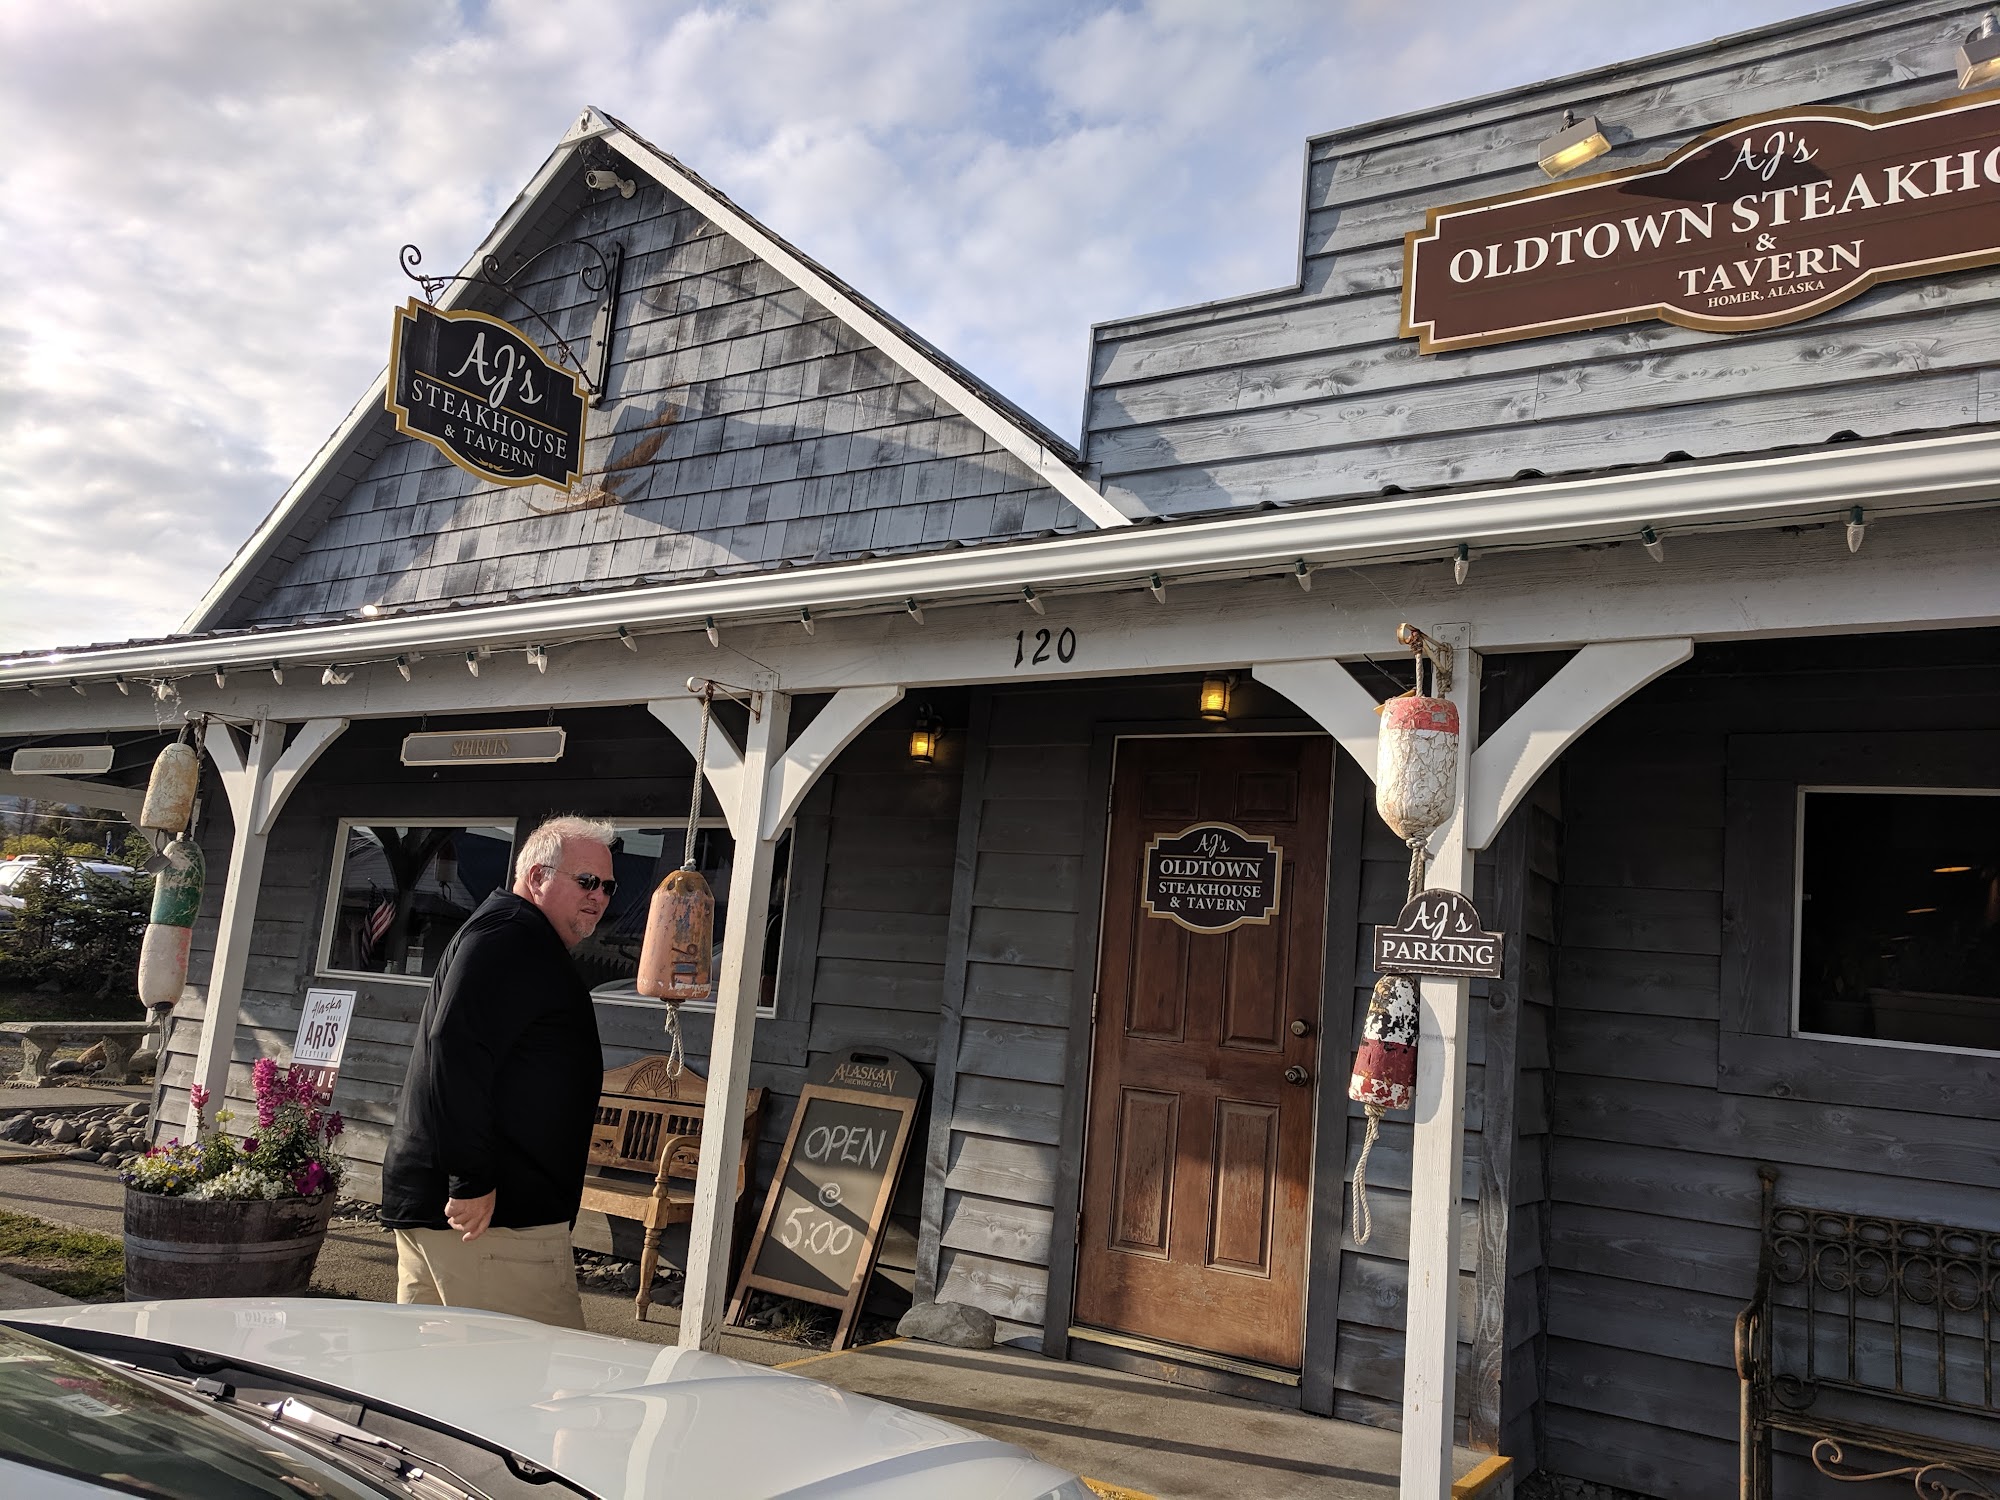 AJ's OldTown Steakhouse & Tavern